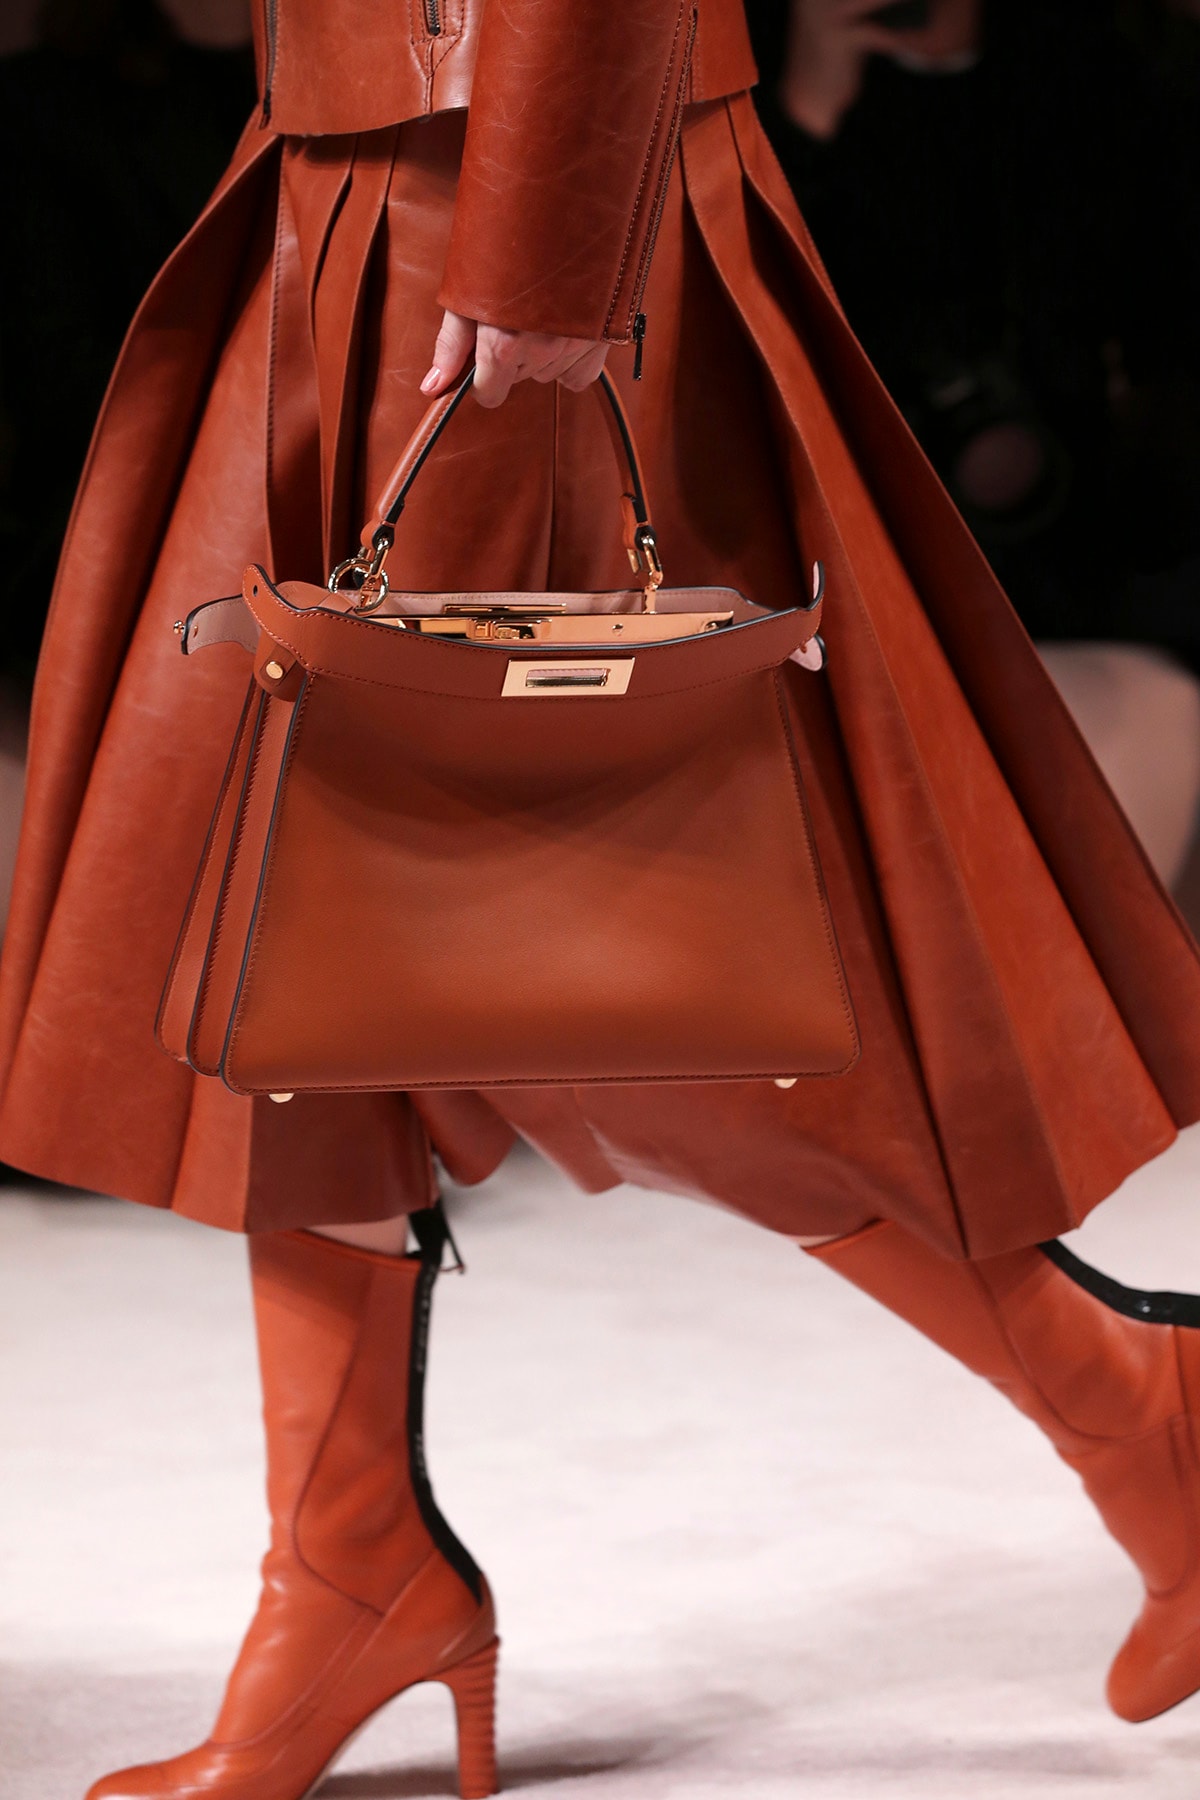 Fendi Fall/Winter 2020 Collection Bags Accessories Peekaboo Brown Orange